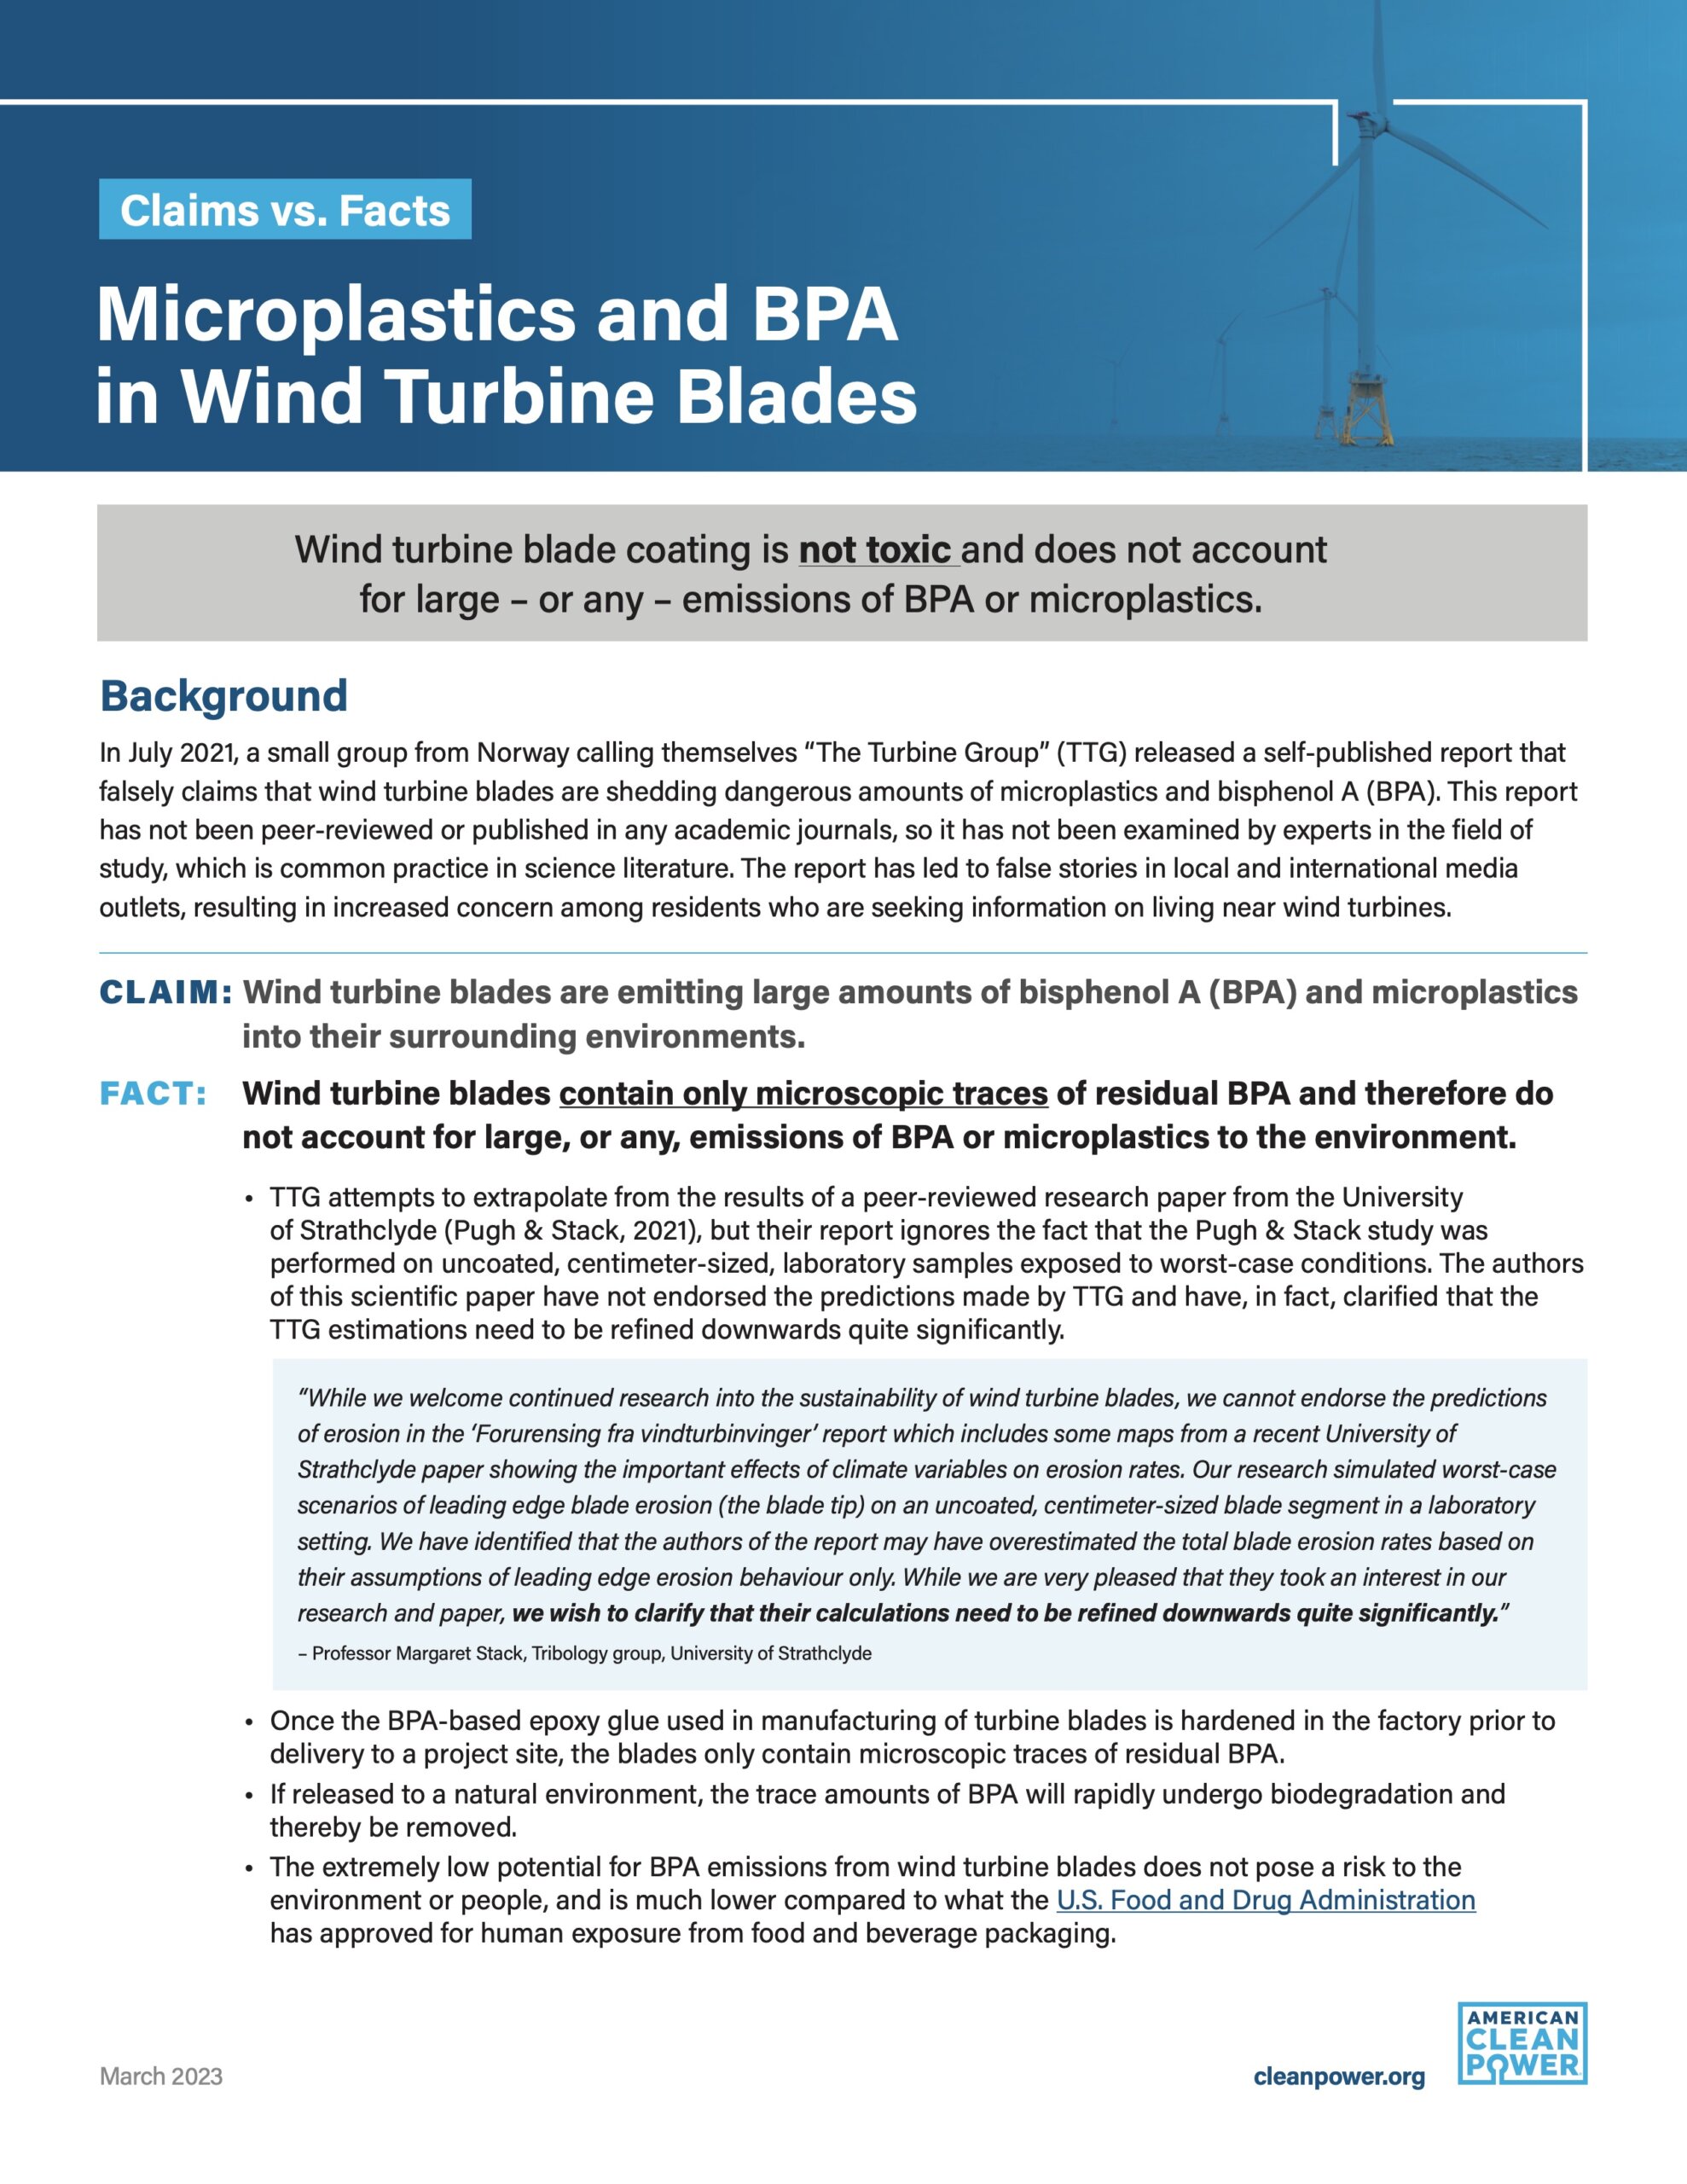 ACP Factsheet on Microplastics and BPA in Wind Turbine Blades.